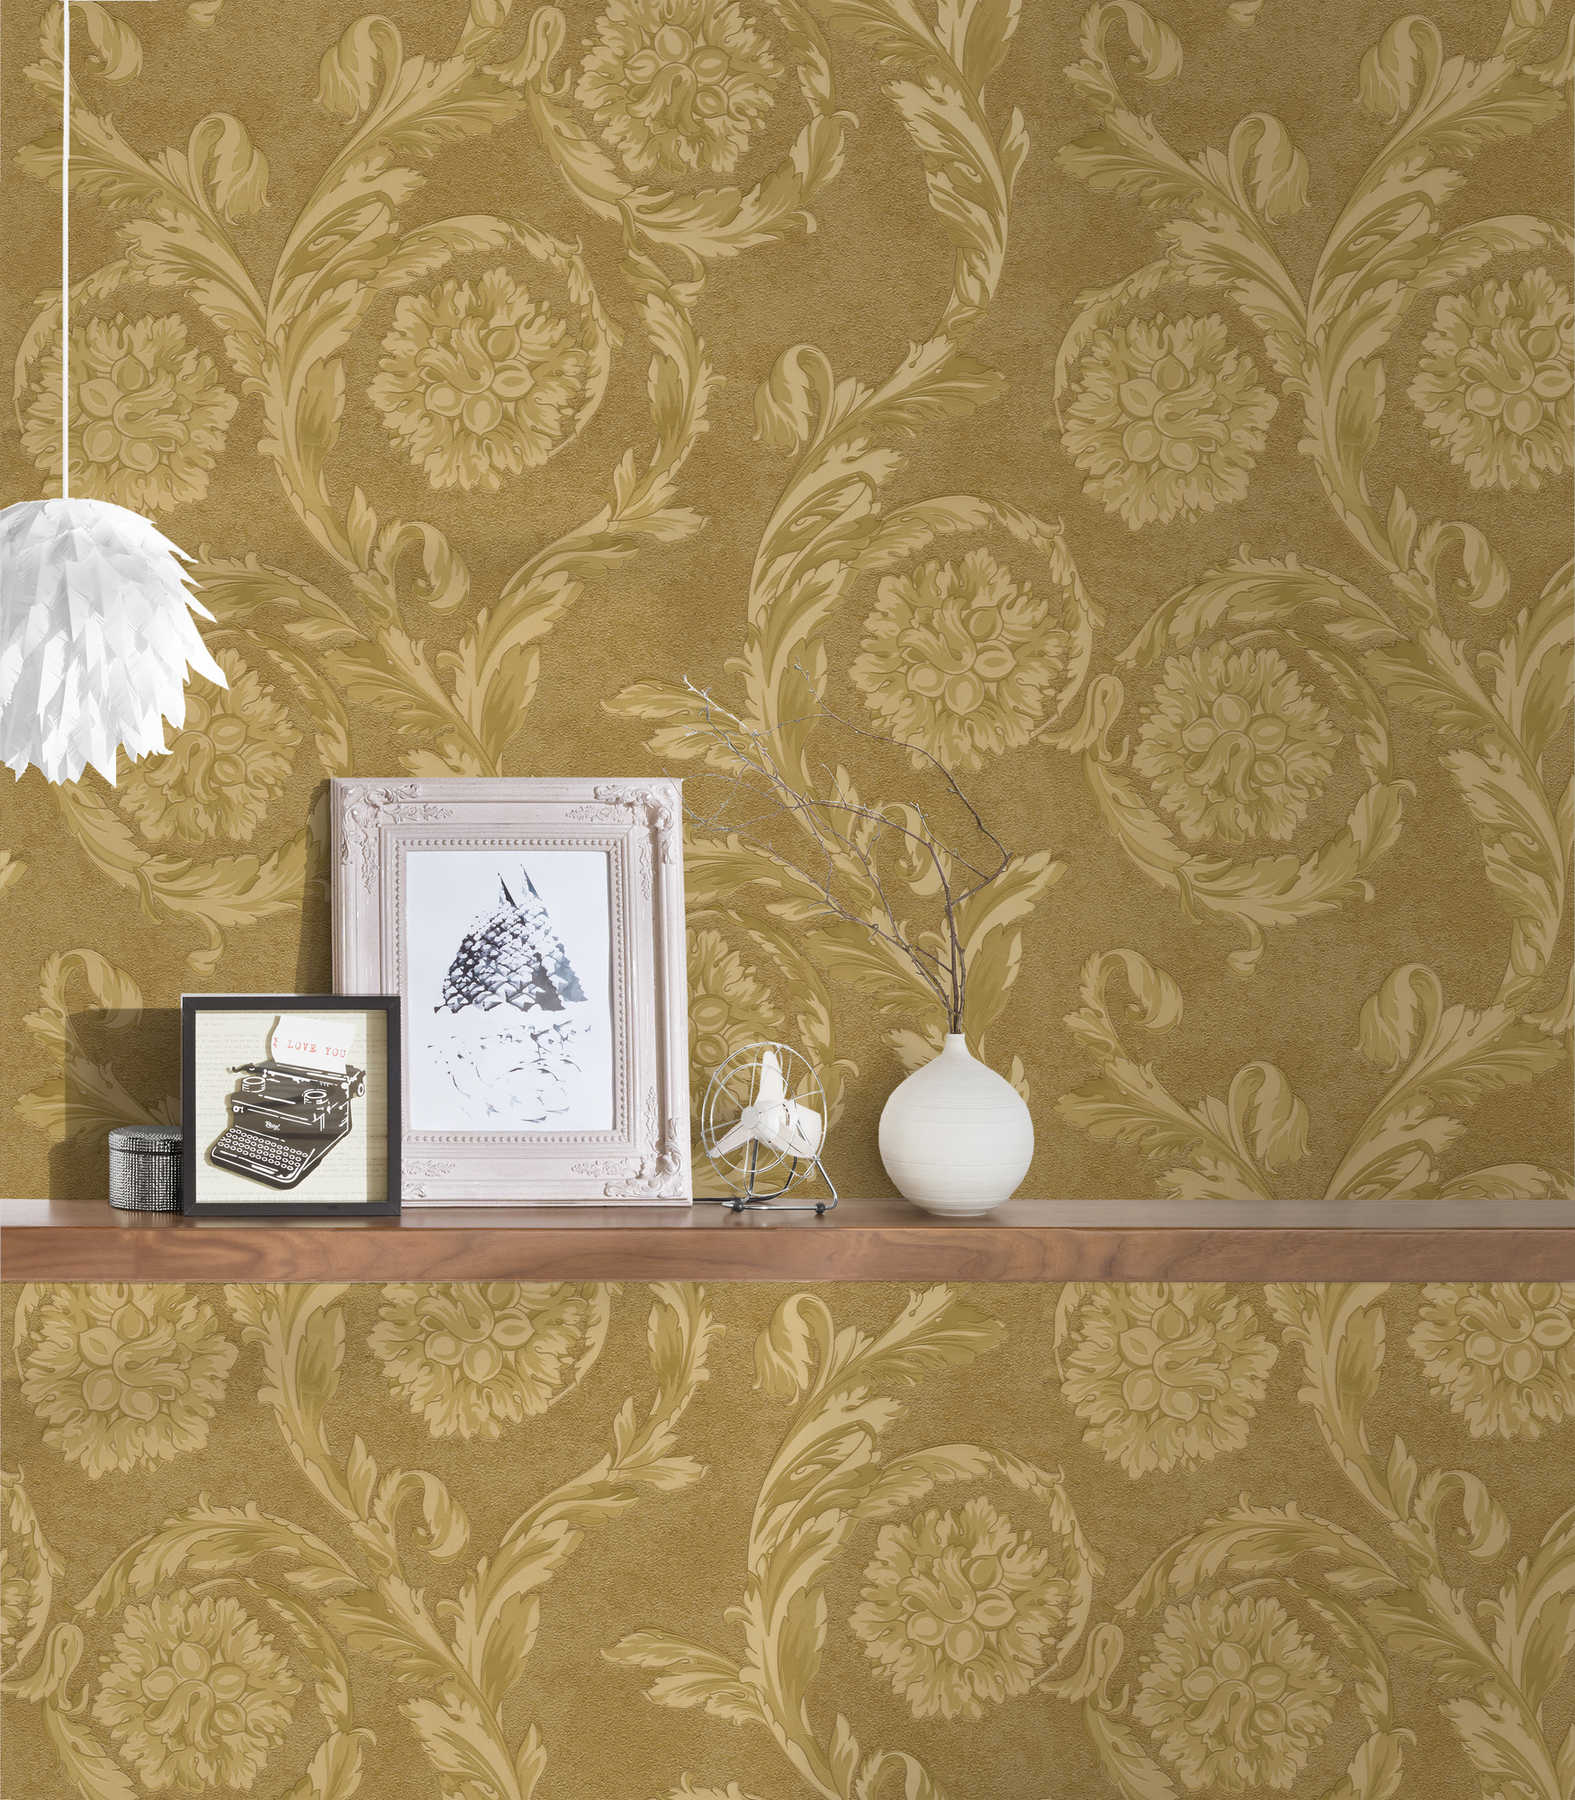             Metallic non-woven wallpaper gold ornament decor - metallic
        